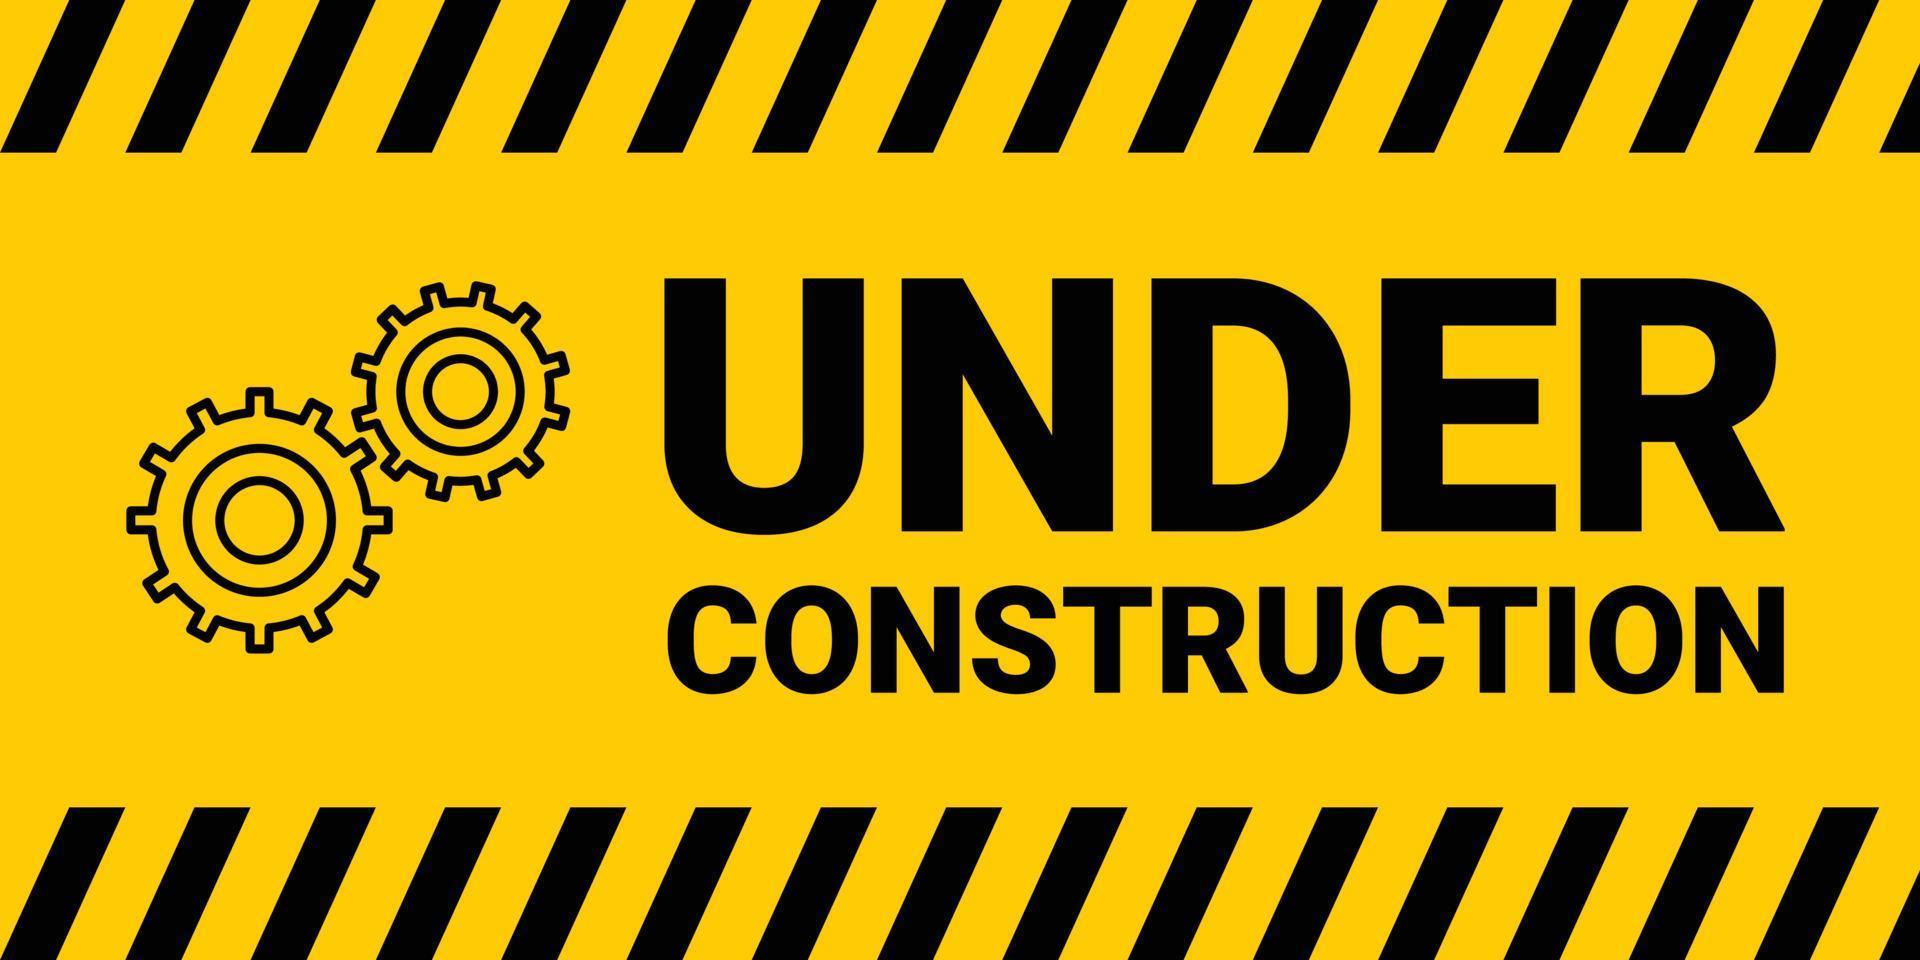 Under construction industrial background vector